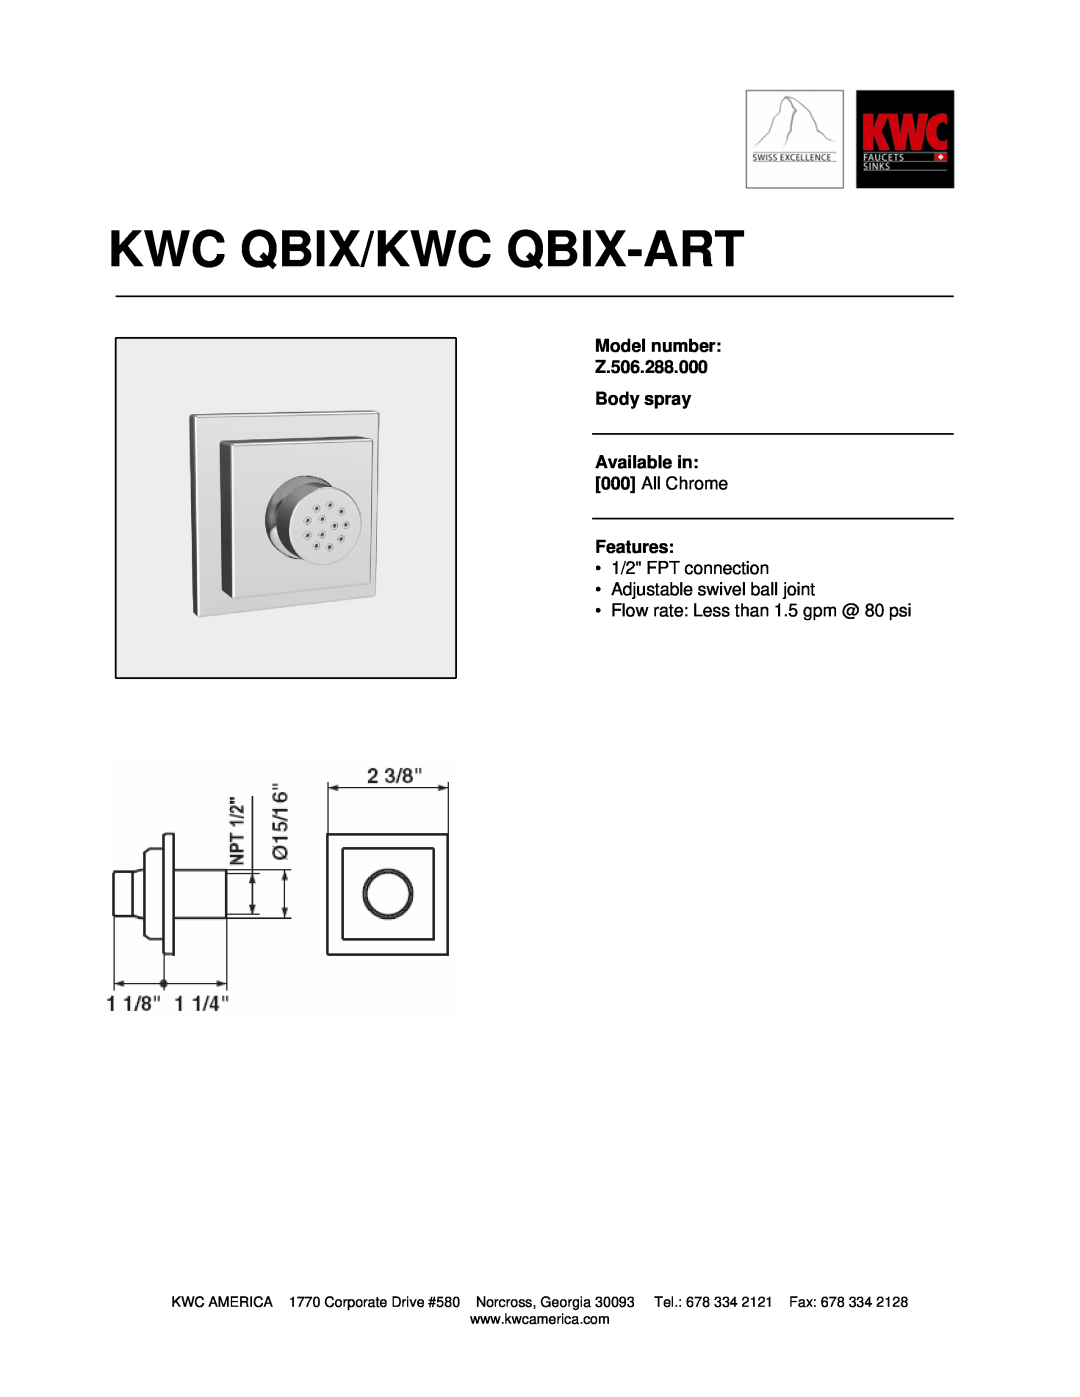 KWC manual Kwc Qbix/Kwc Qbix-Art, Model number Z.506.288.000 Body spray, Available in, All Chrome, Features 